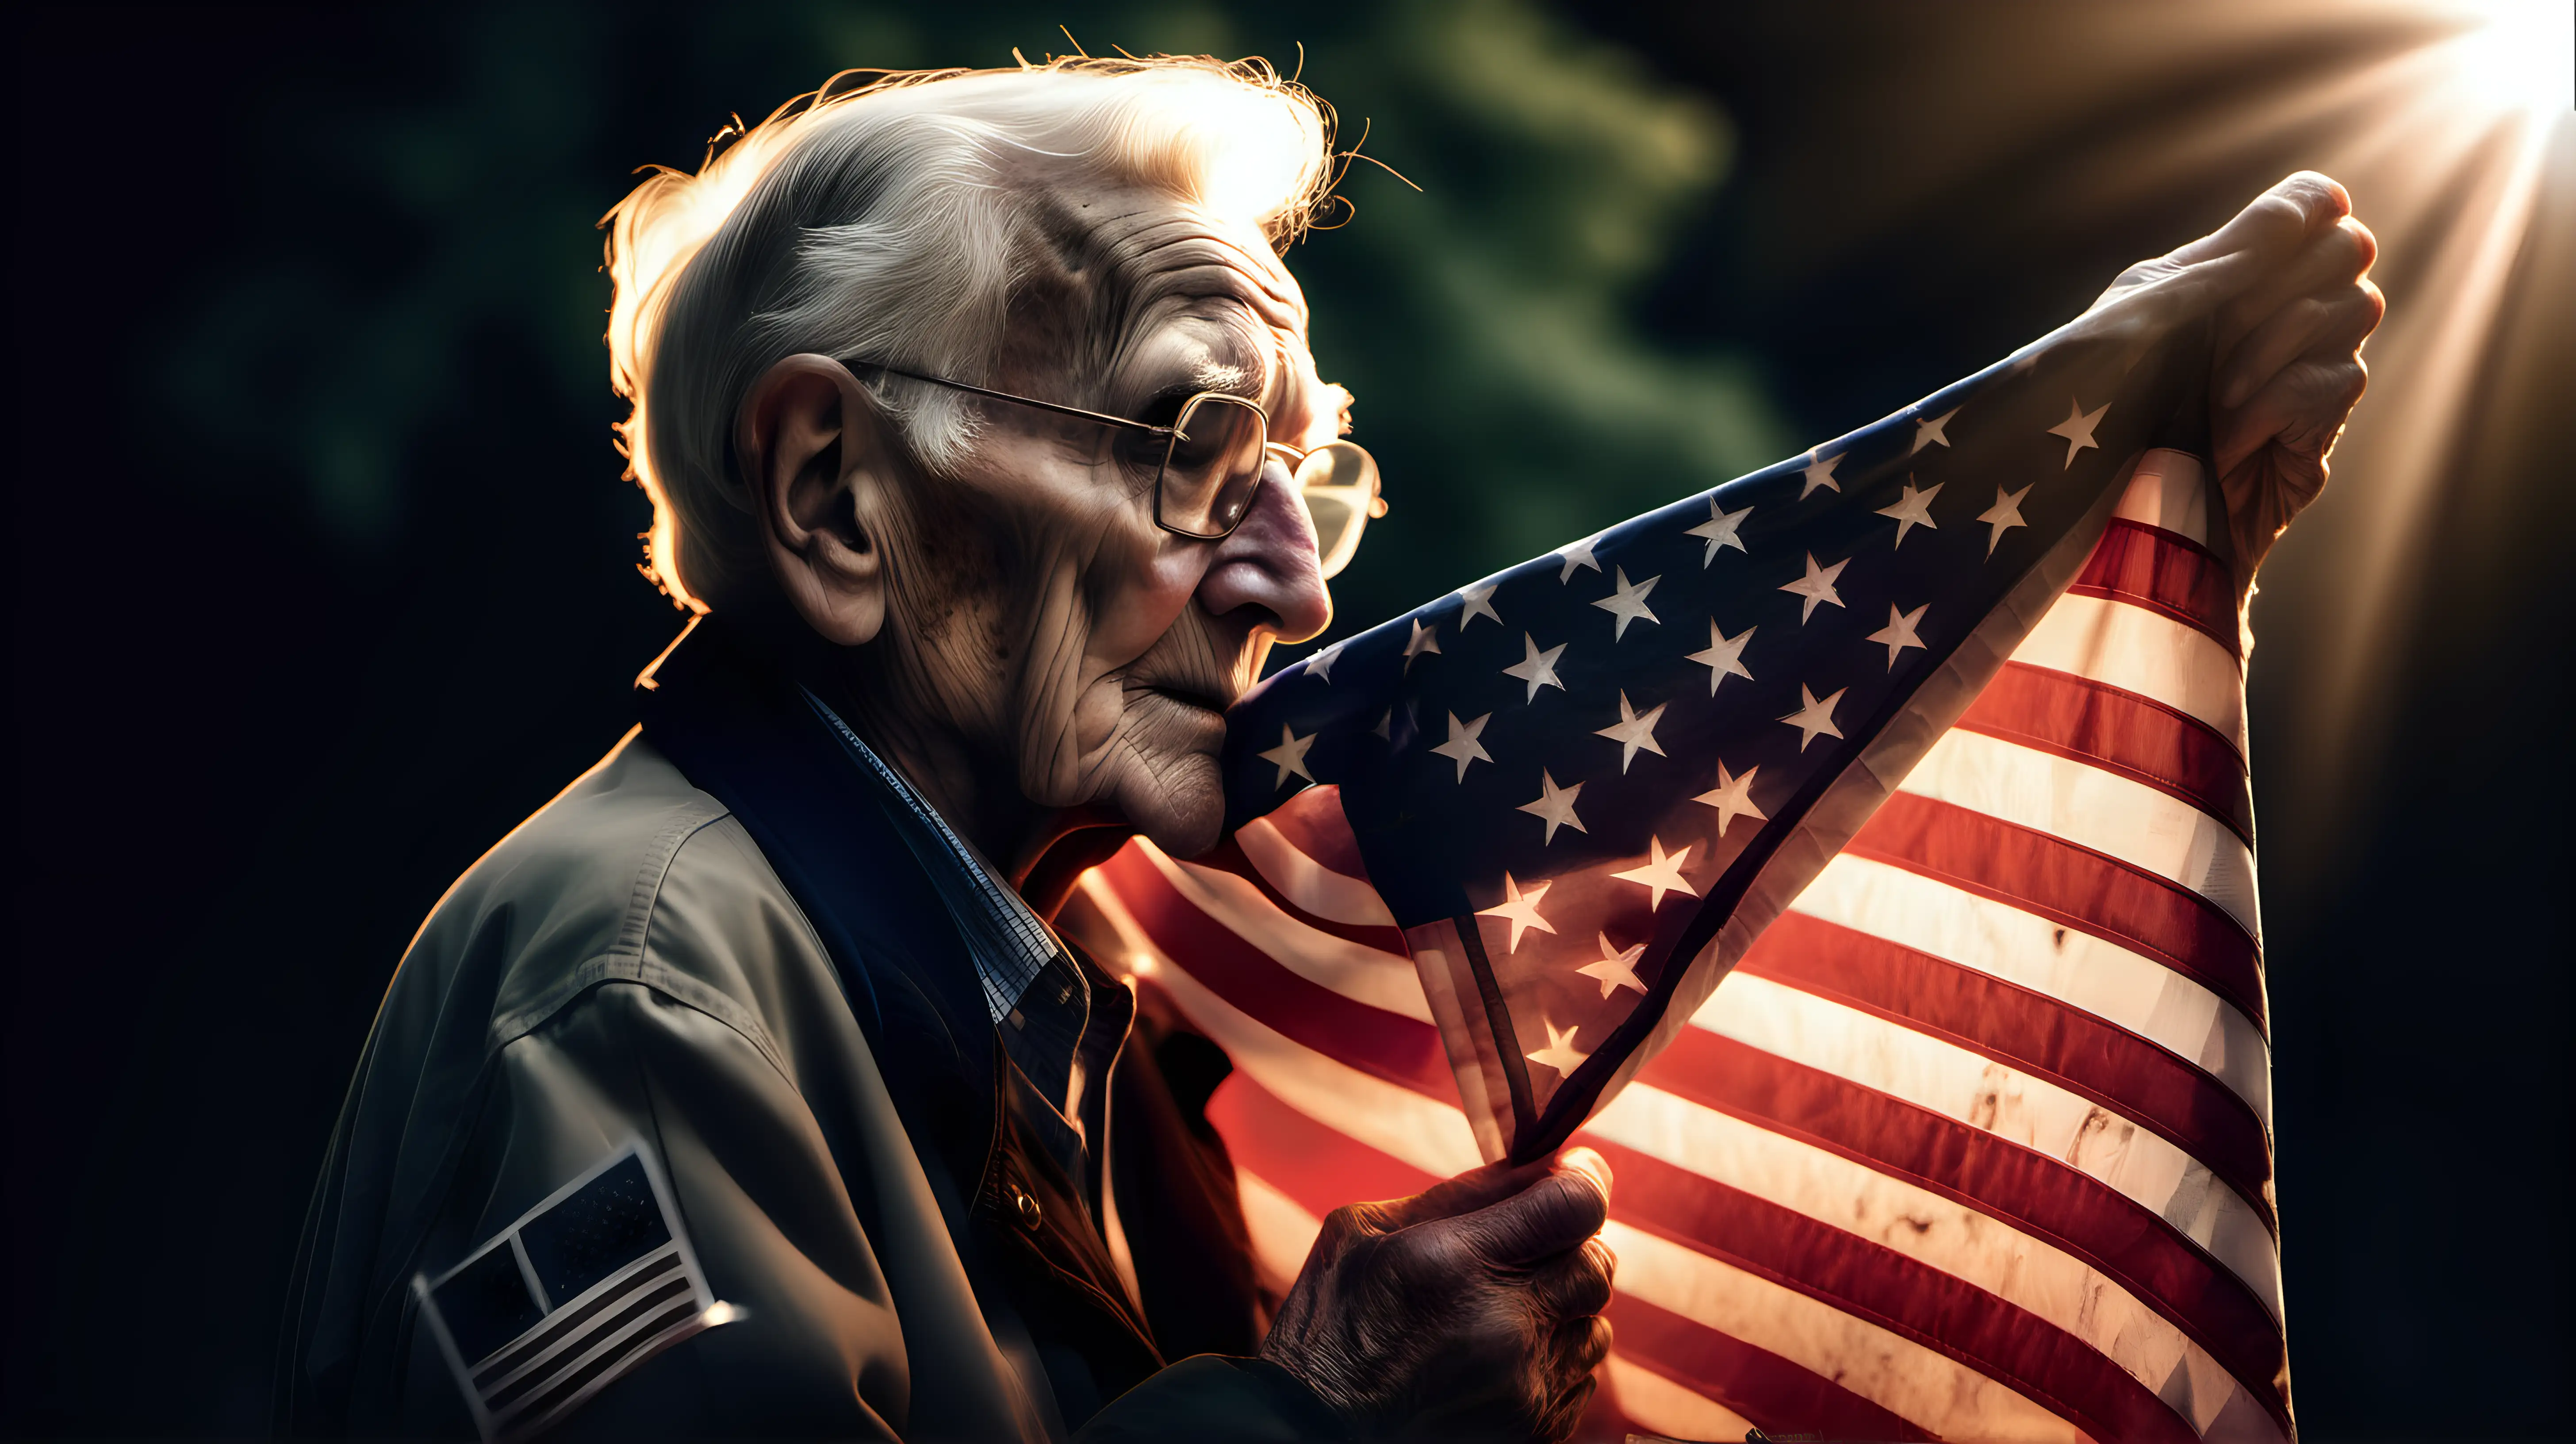 Veteran Holding Glowing American Flag with Tender Devotion